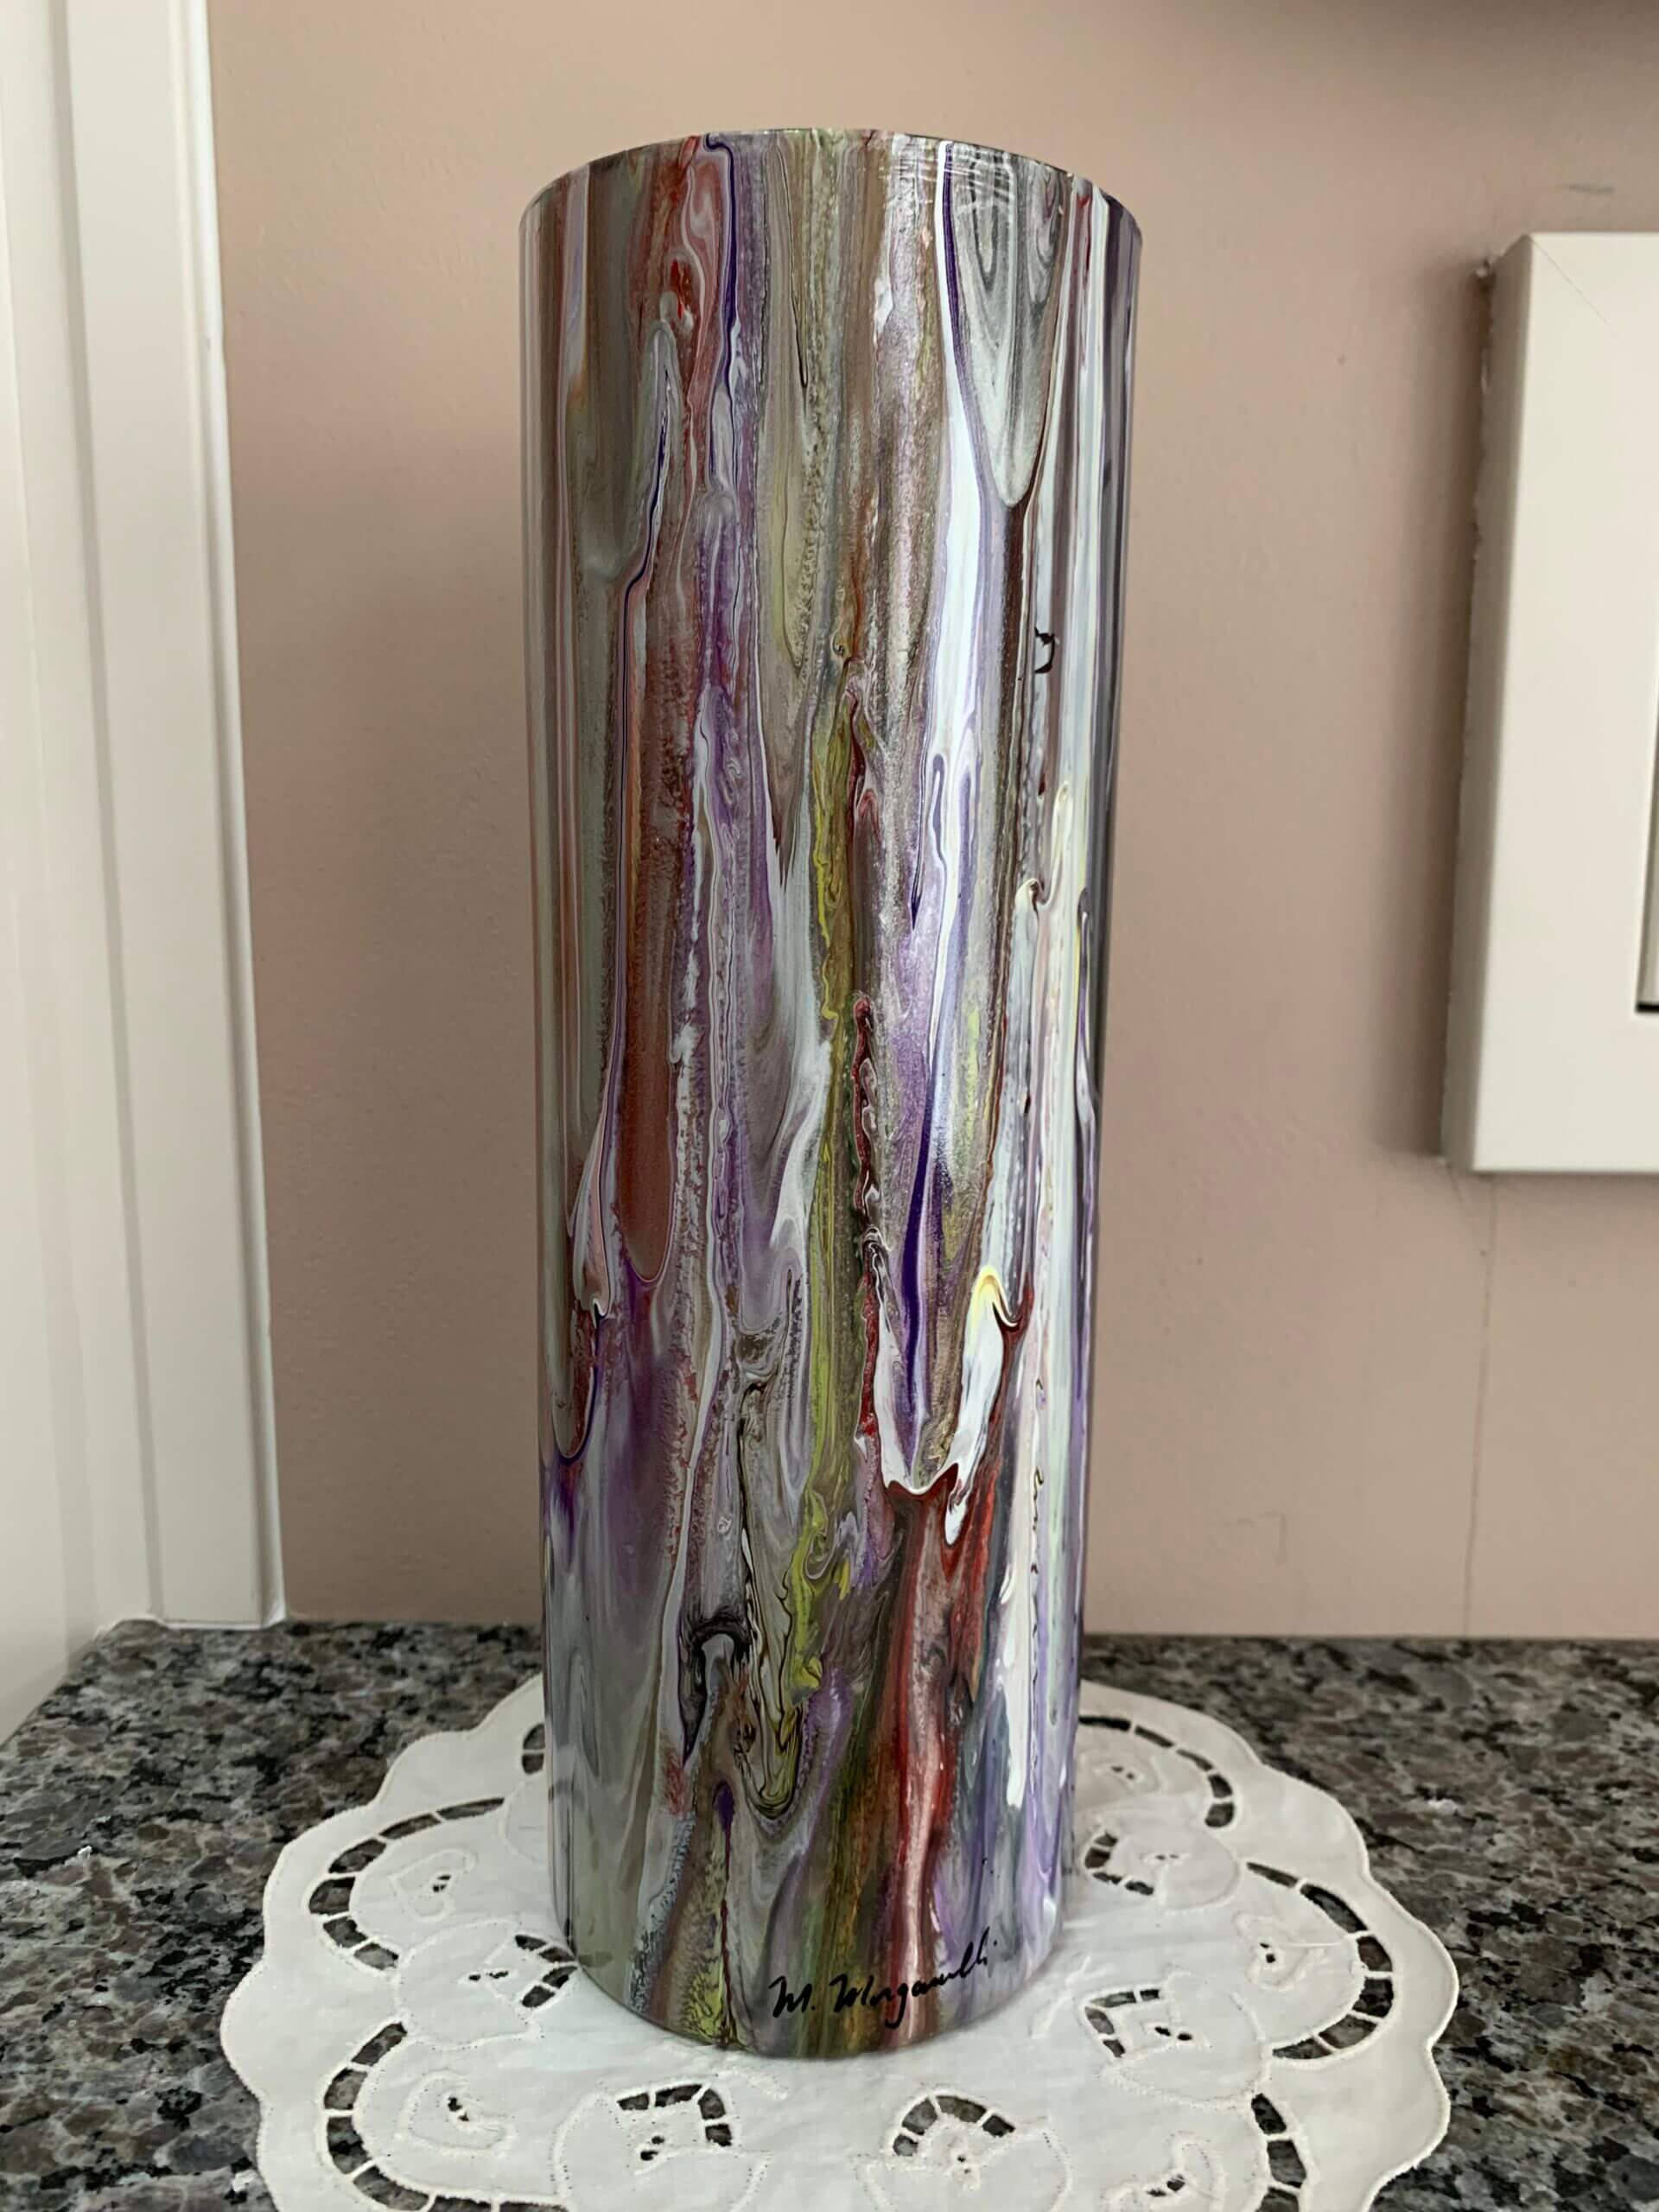 Glass Vase - Tall round